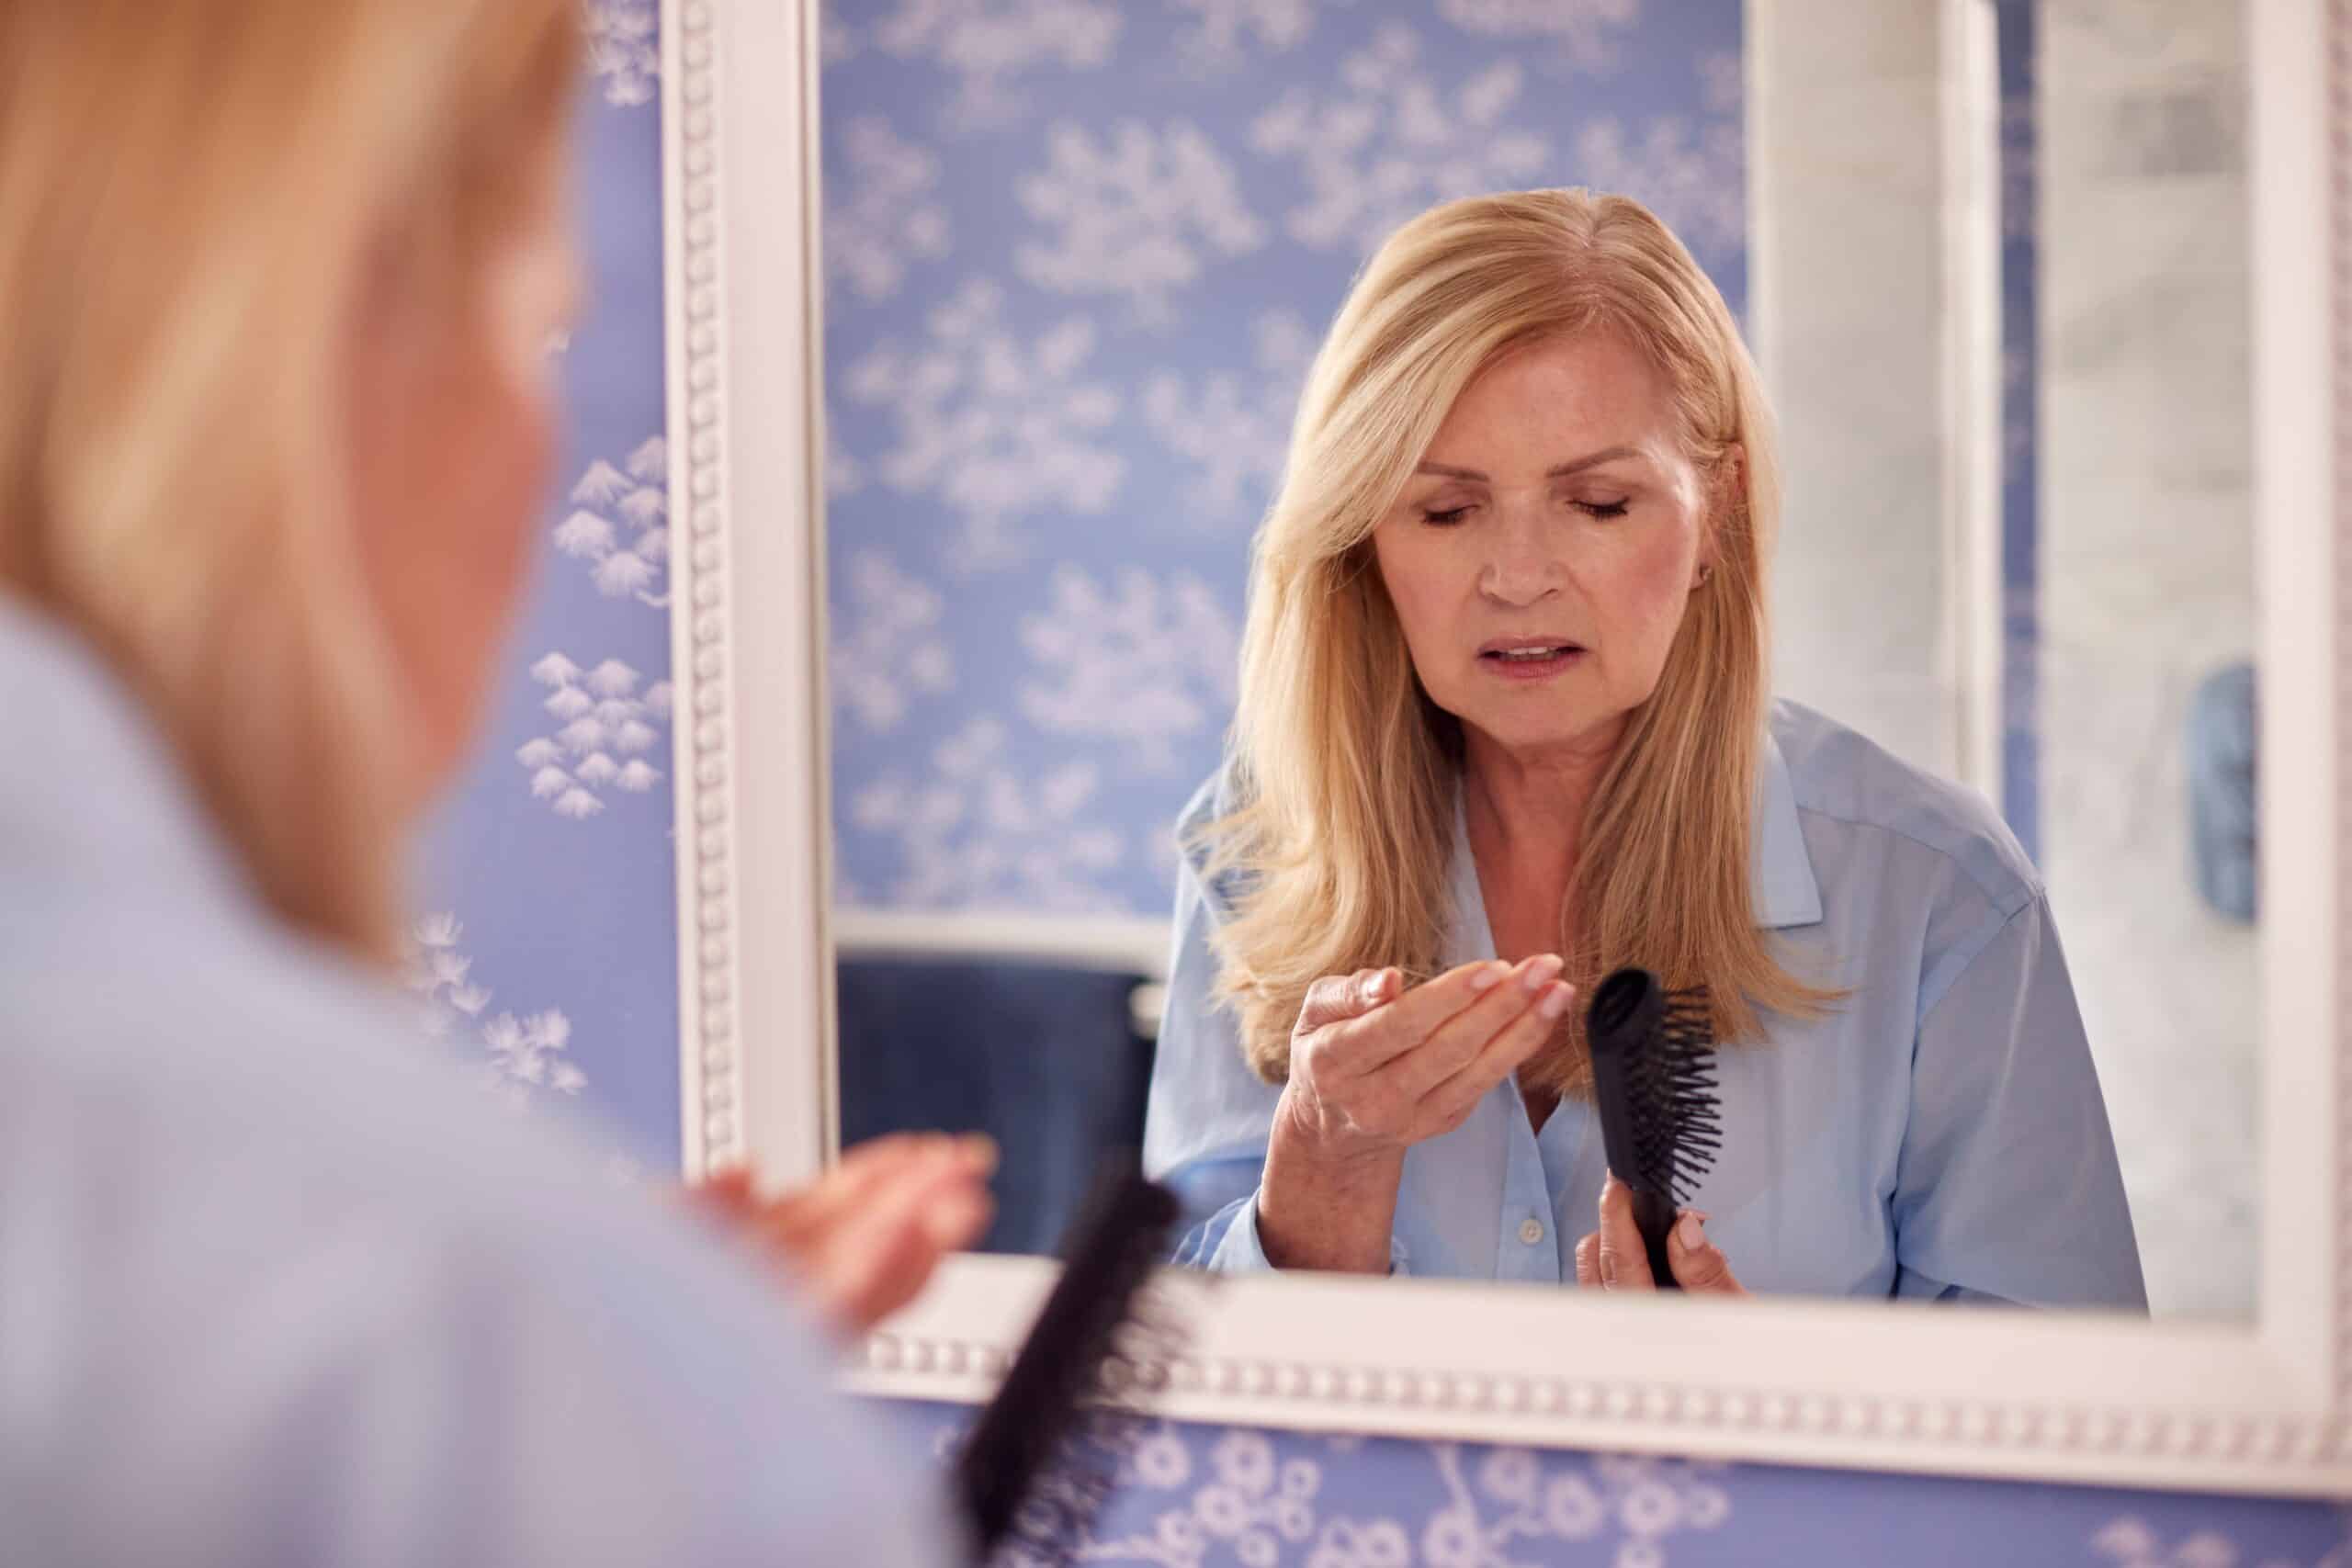 Menopausal Mature Woman Suffering Hair Loss Brushing Hair In Mirror At Home